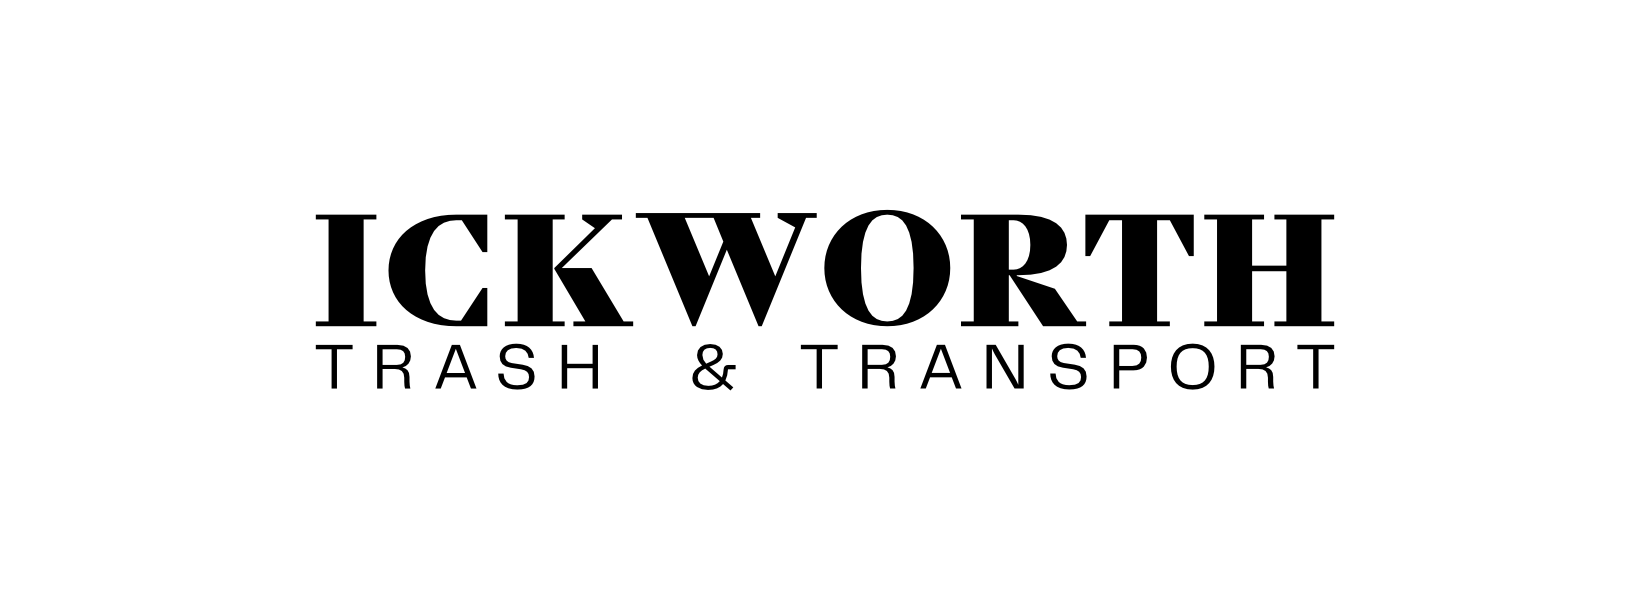 Ickworth Trash and Treasure Logo